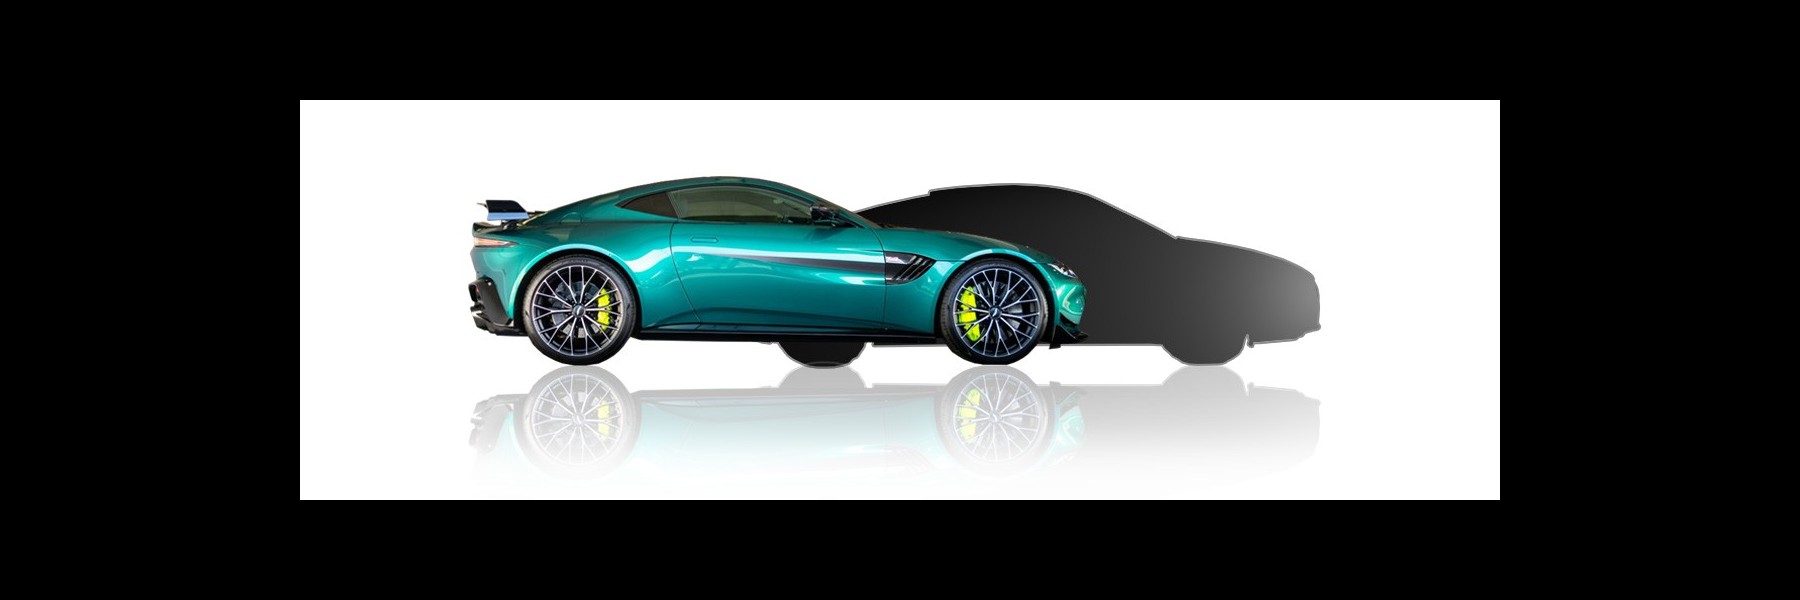 Combo Aston Martin + car of your choice